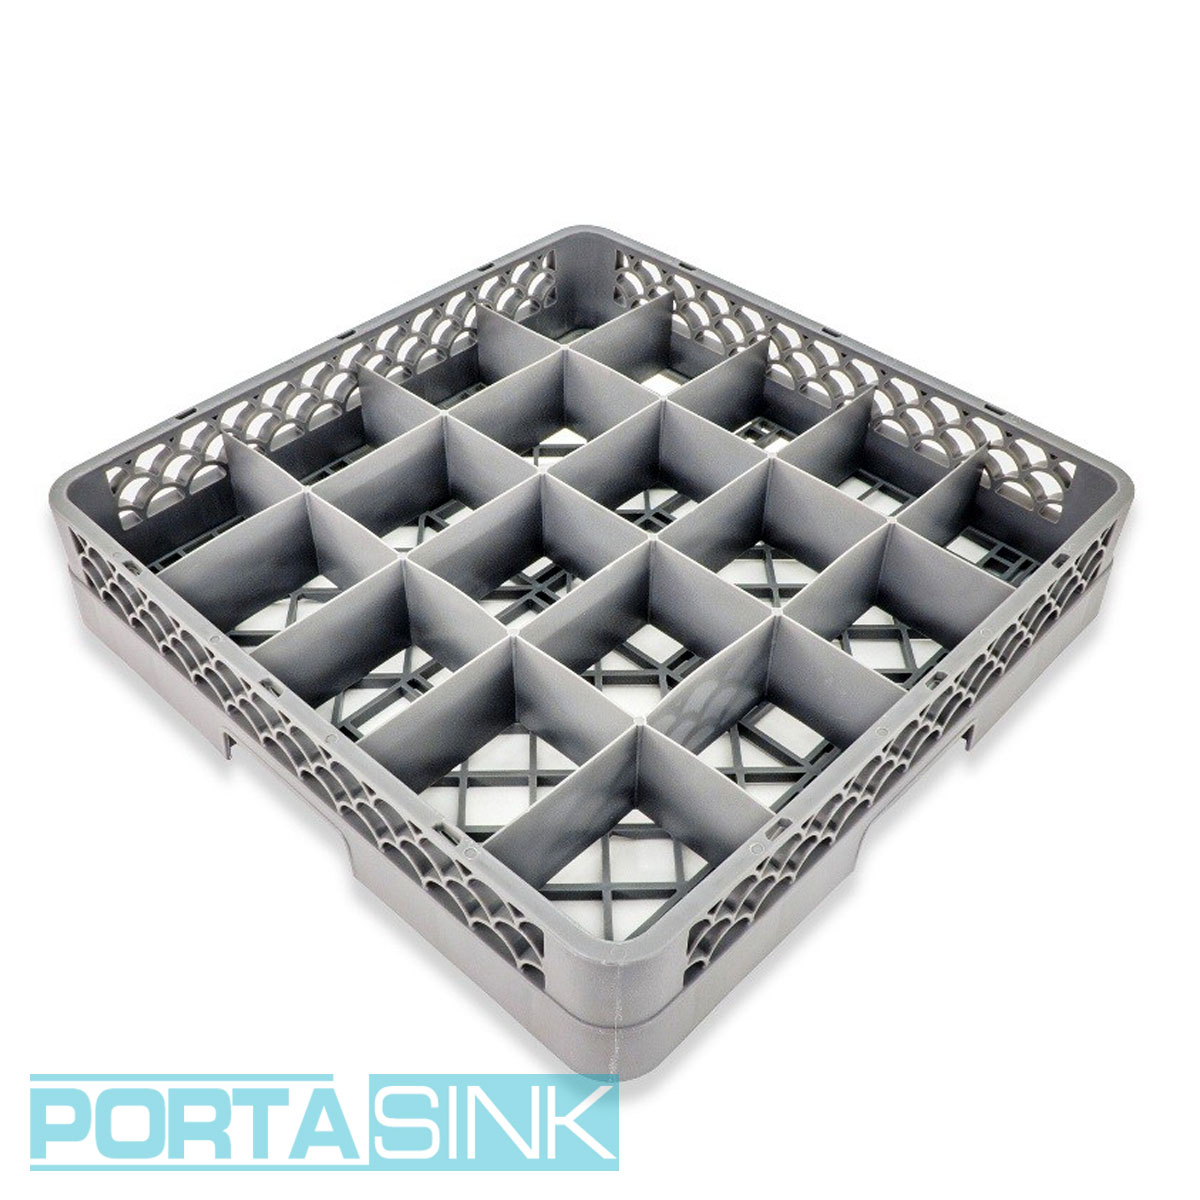 https://www.porta-sink.com/wp-content/uploads/2018/12/crestware-dishwasher-rack-20-compartment-01.jpg